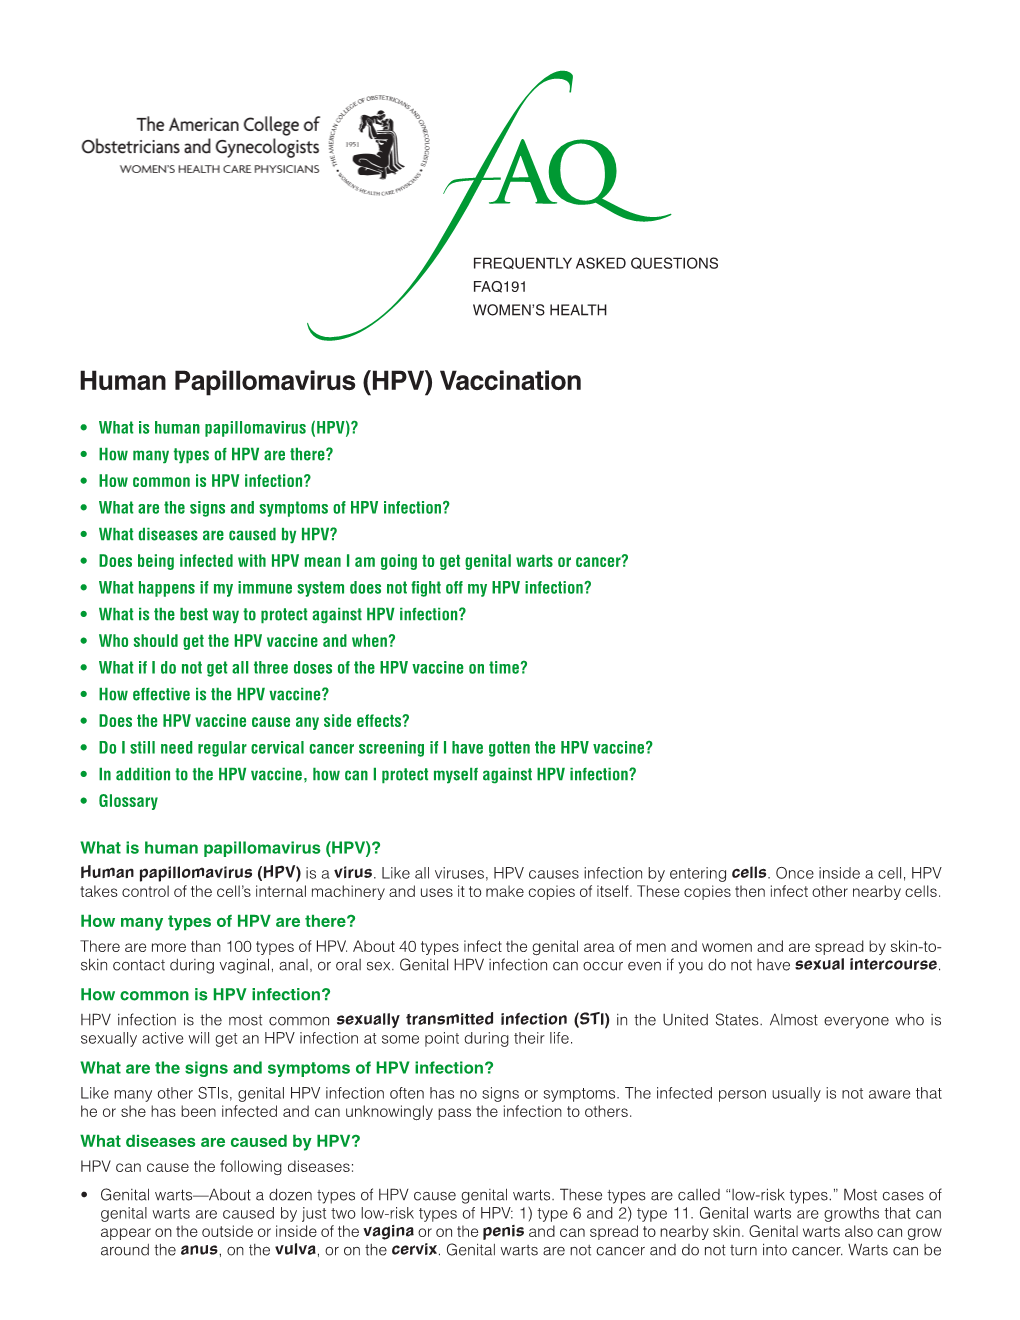 FAQ191 -- Human Papillomavirus (HPV) Vaccination